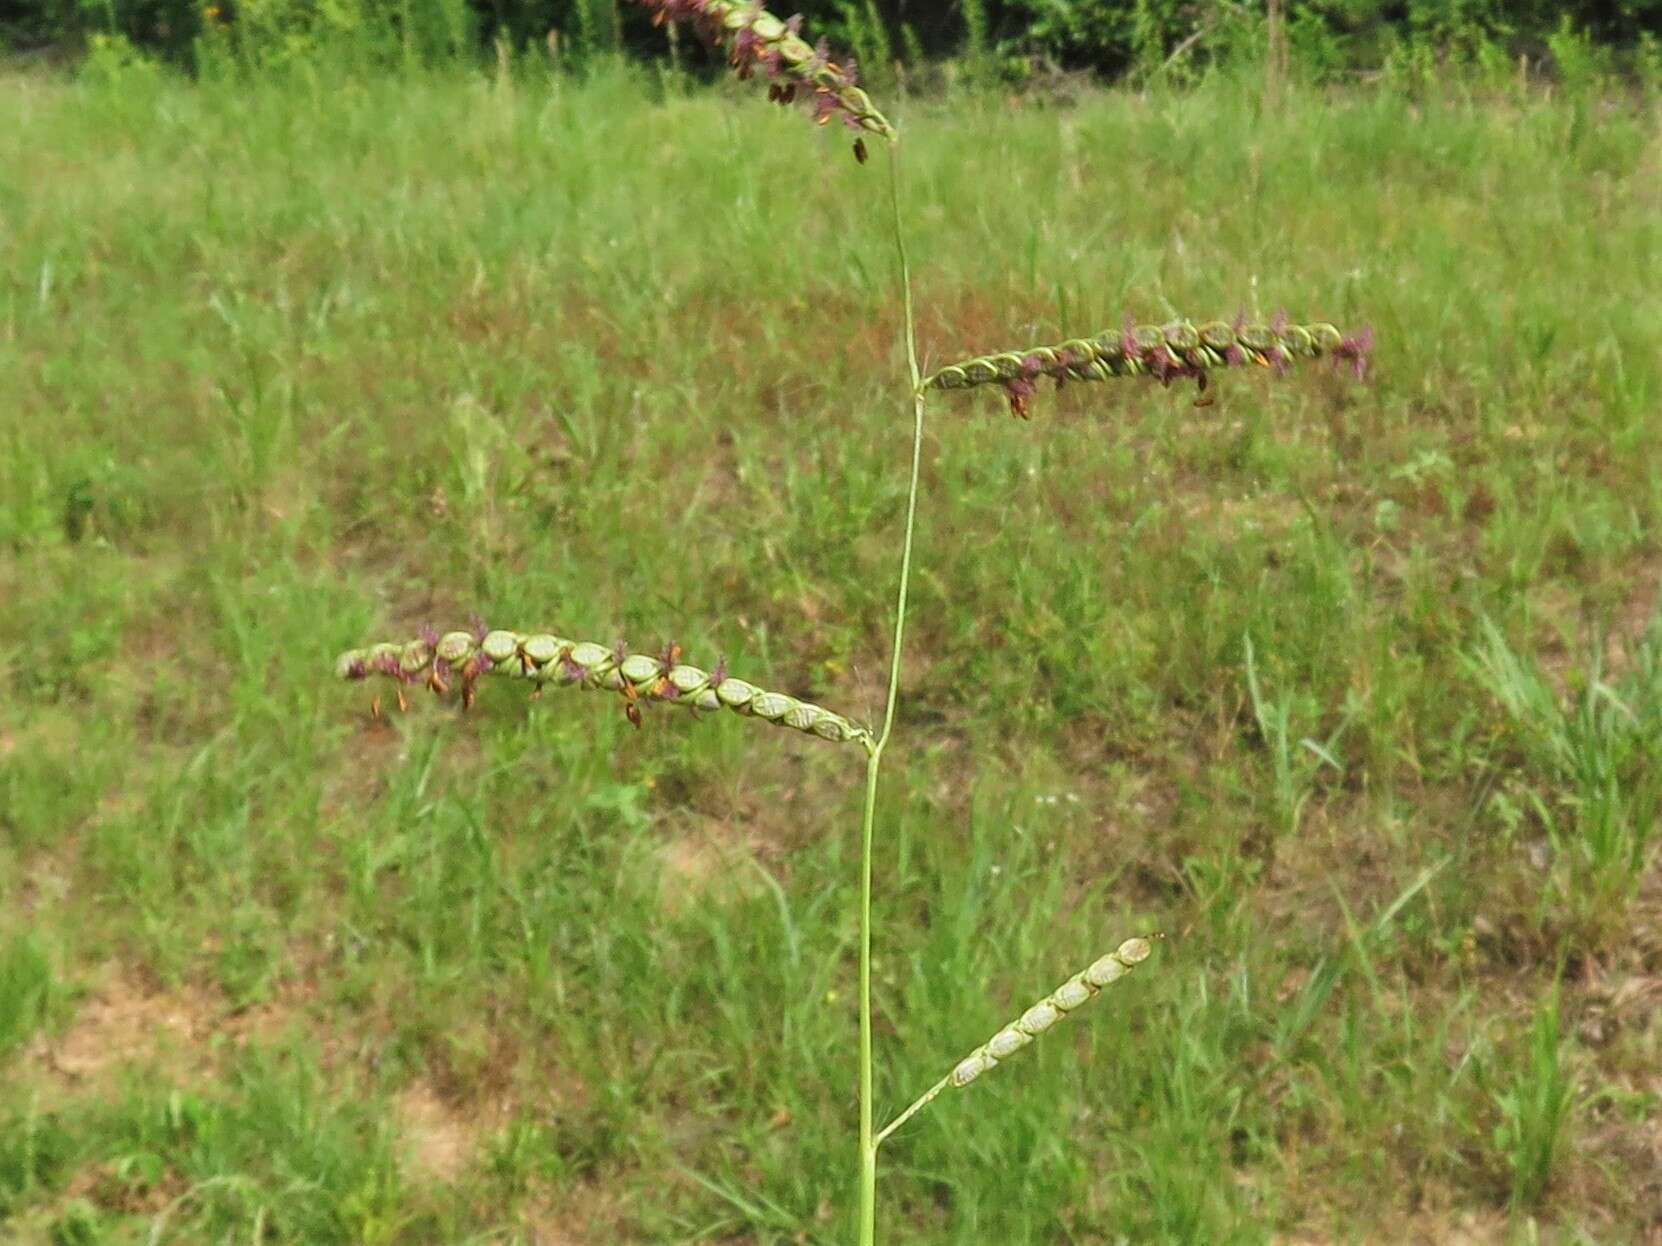 Image of brownseed paspalum